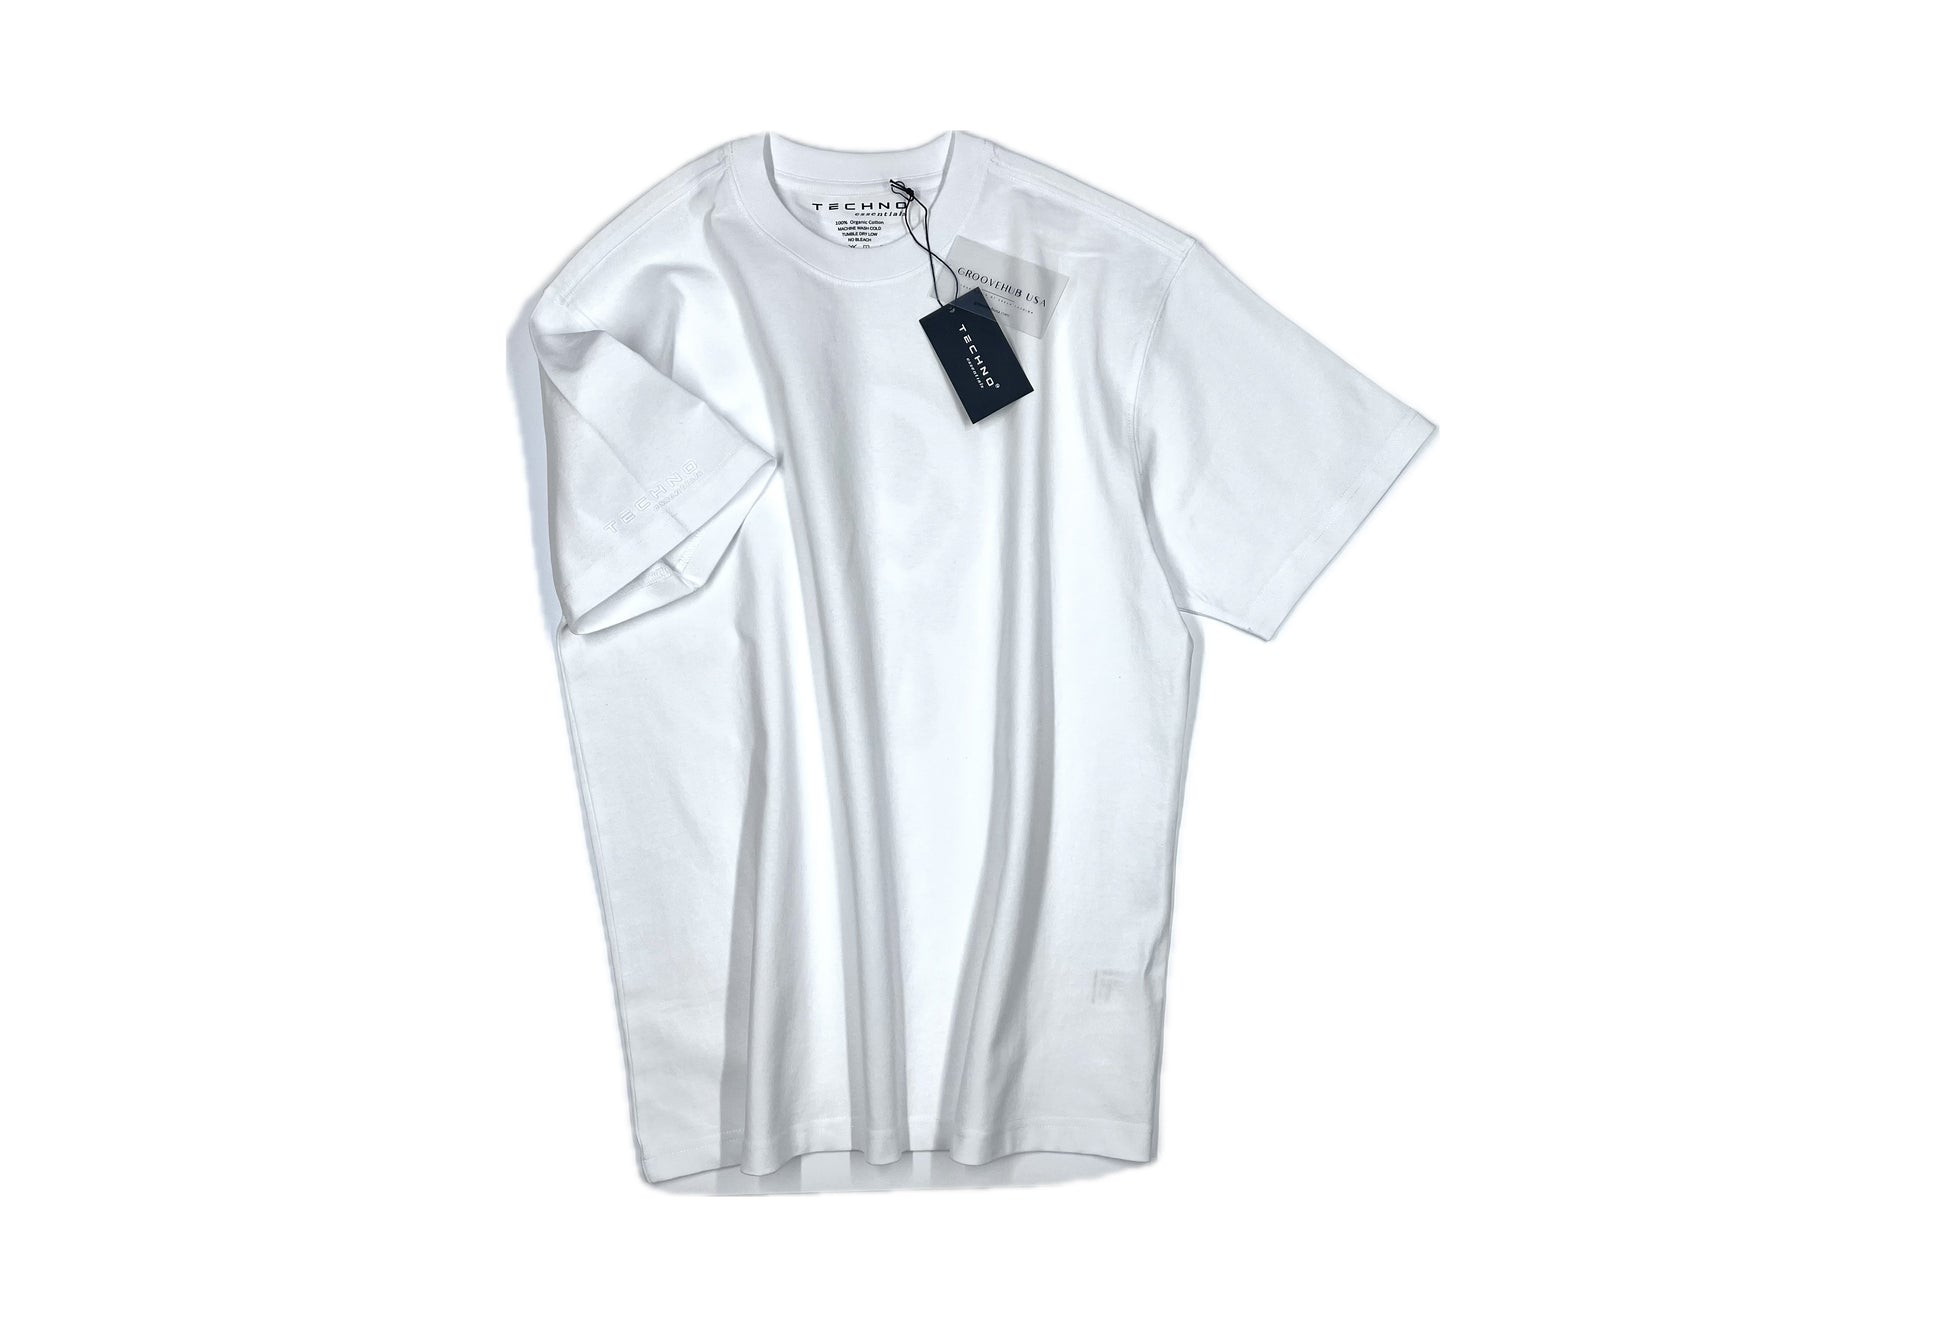 TECHNO essentials 100% Organic Cotton High Quality Oversized Drop Shoulder T-Shirt